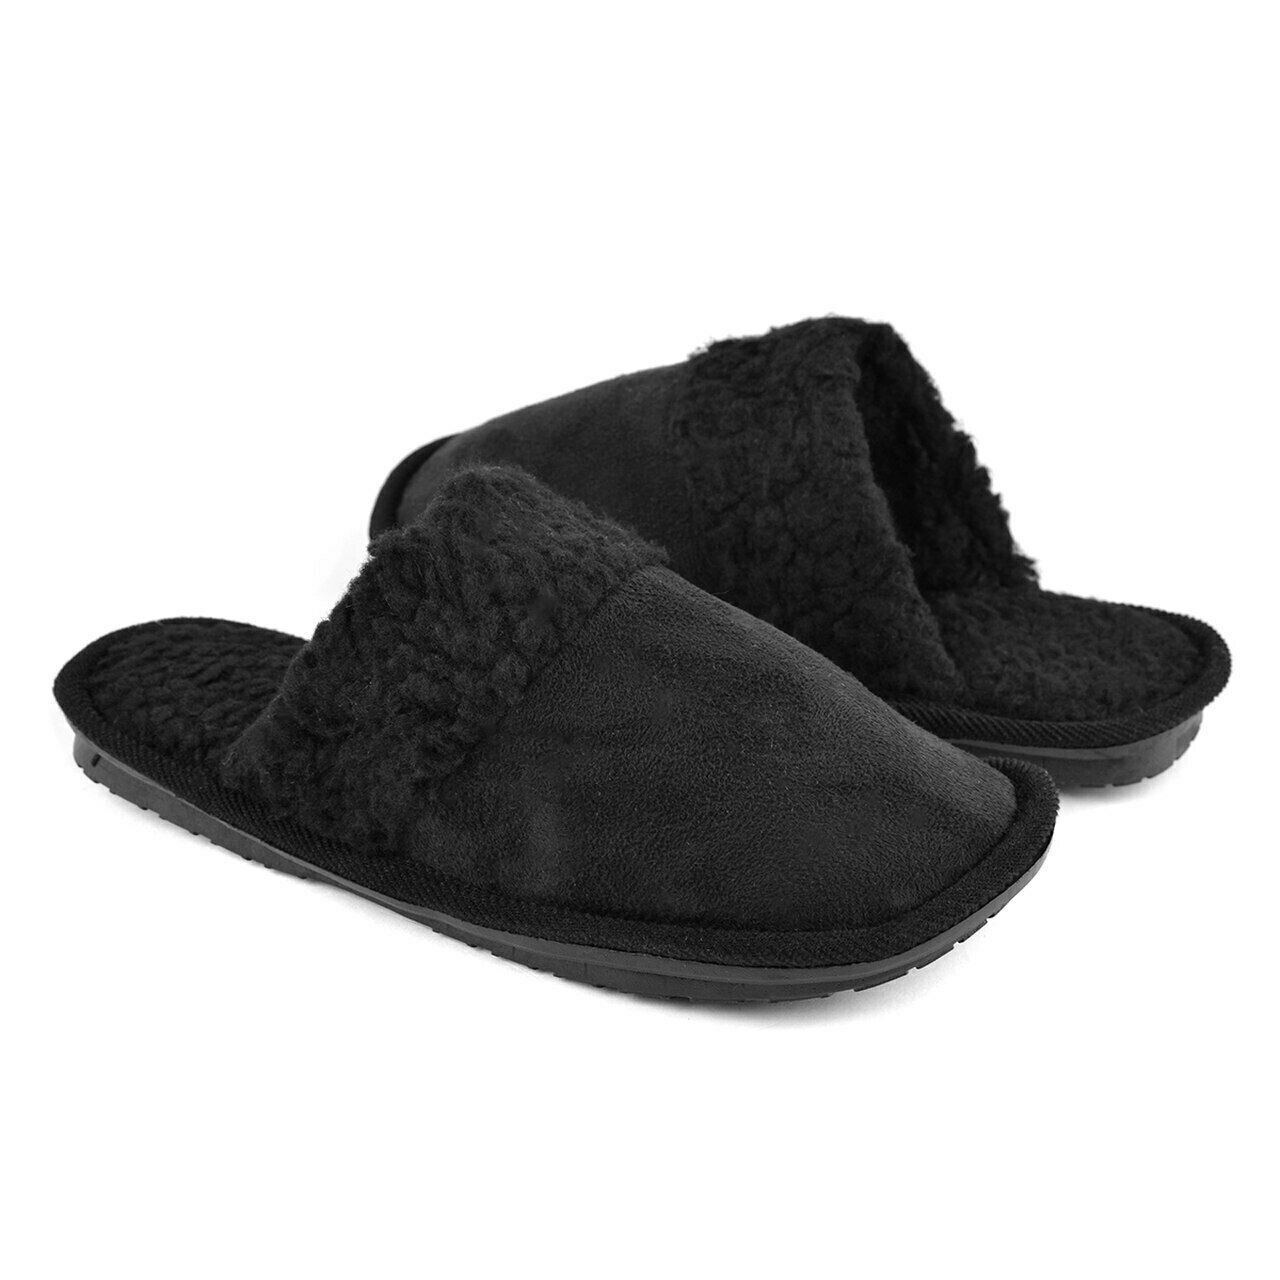 Men's Slippers Size MEDIUM 9-10 Black W Black Sherpa Lining Memory Foam NEW